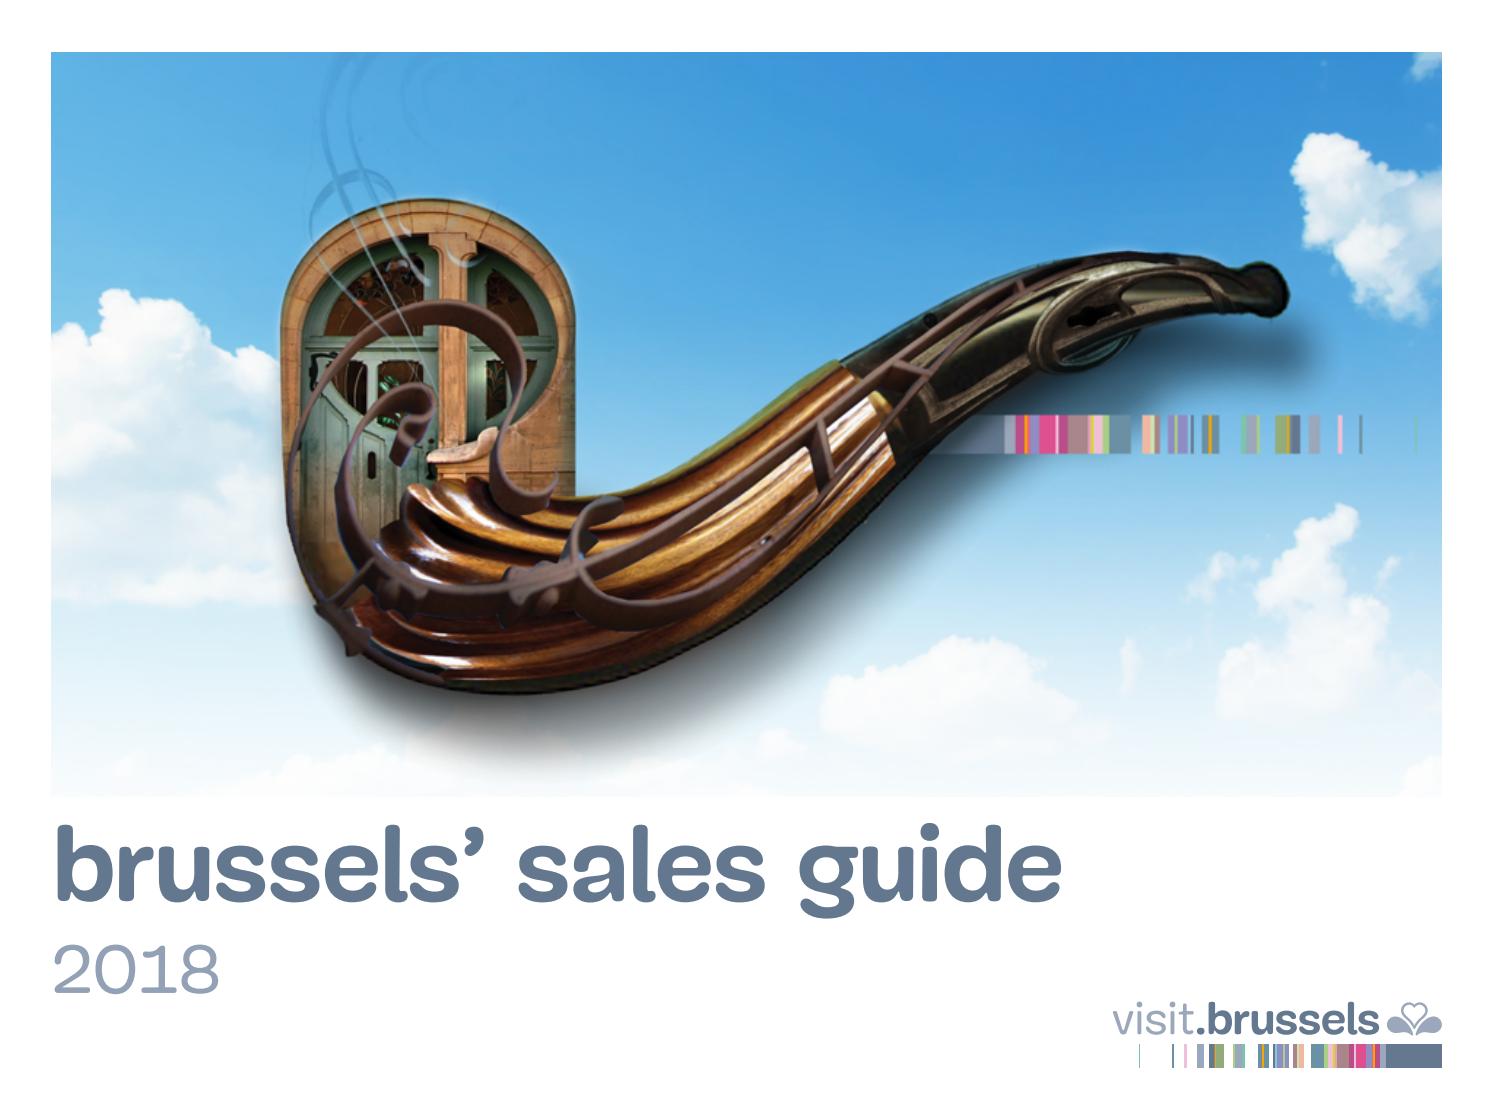 Rue Du Commerce Salon De Jardin Frais Brussels Sales Guide 2018 by Visitussels issuu